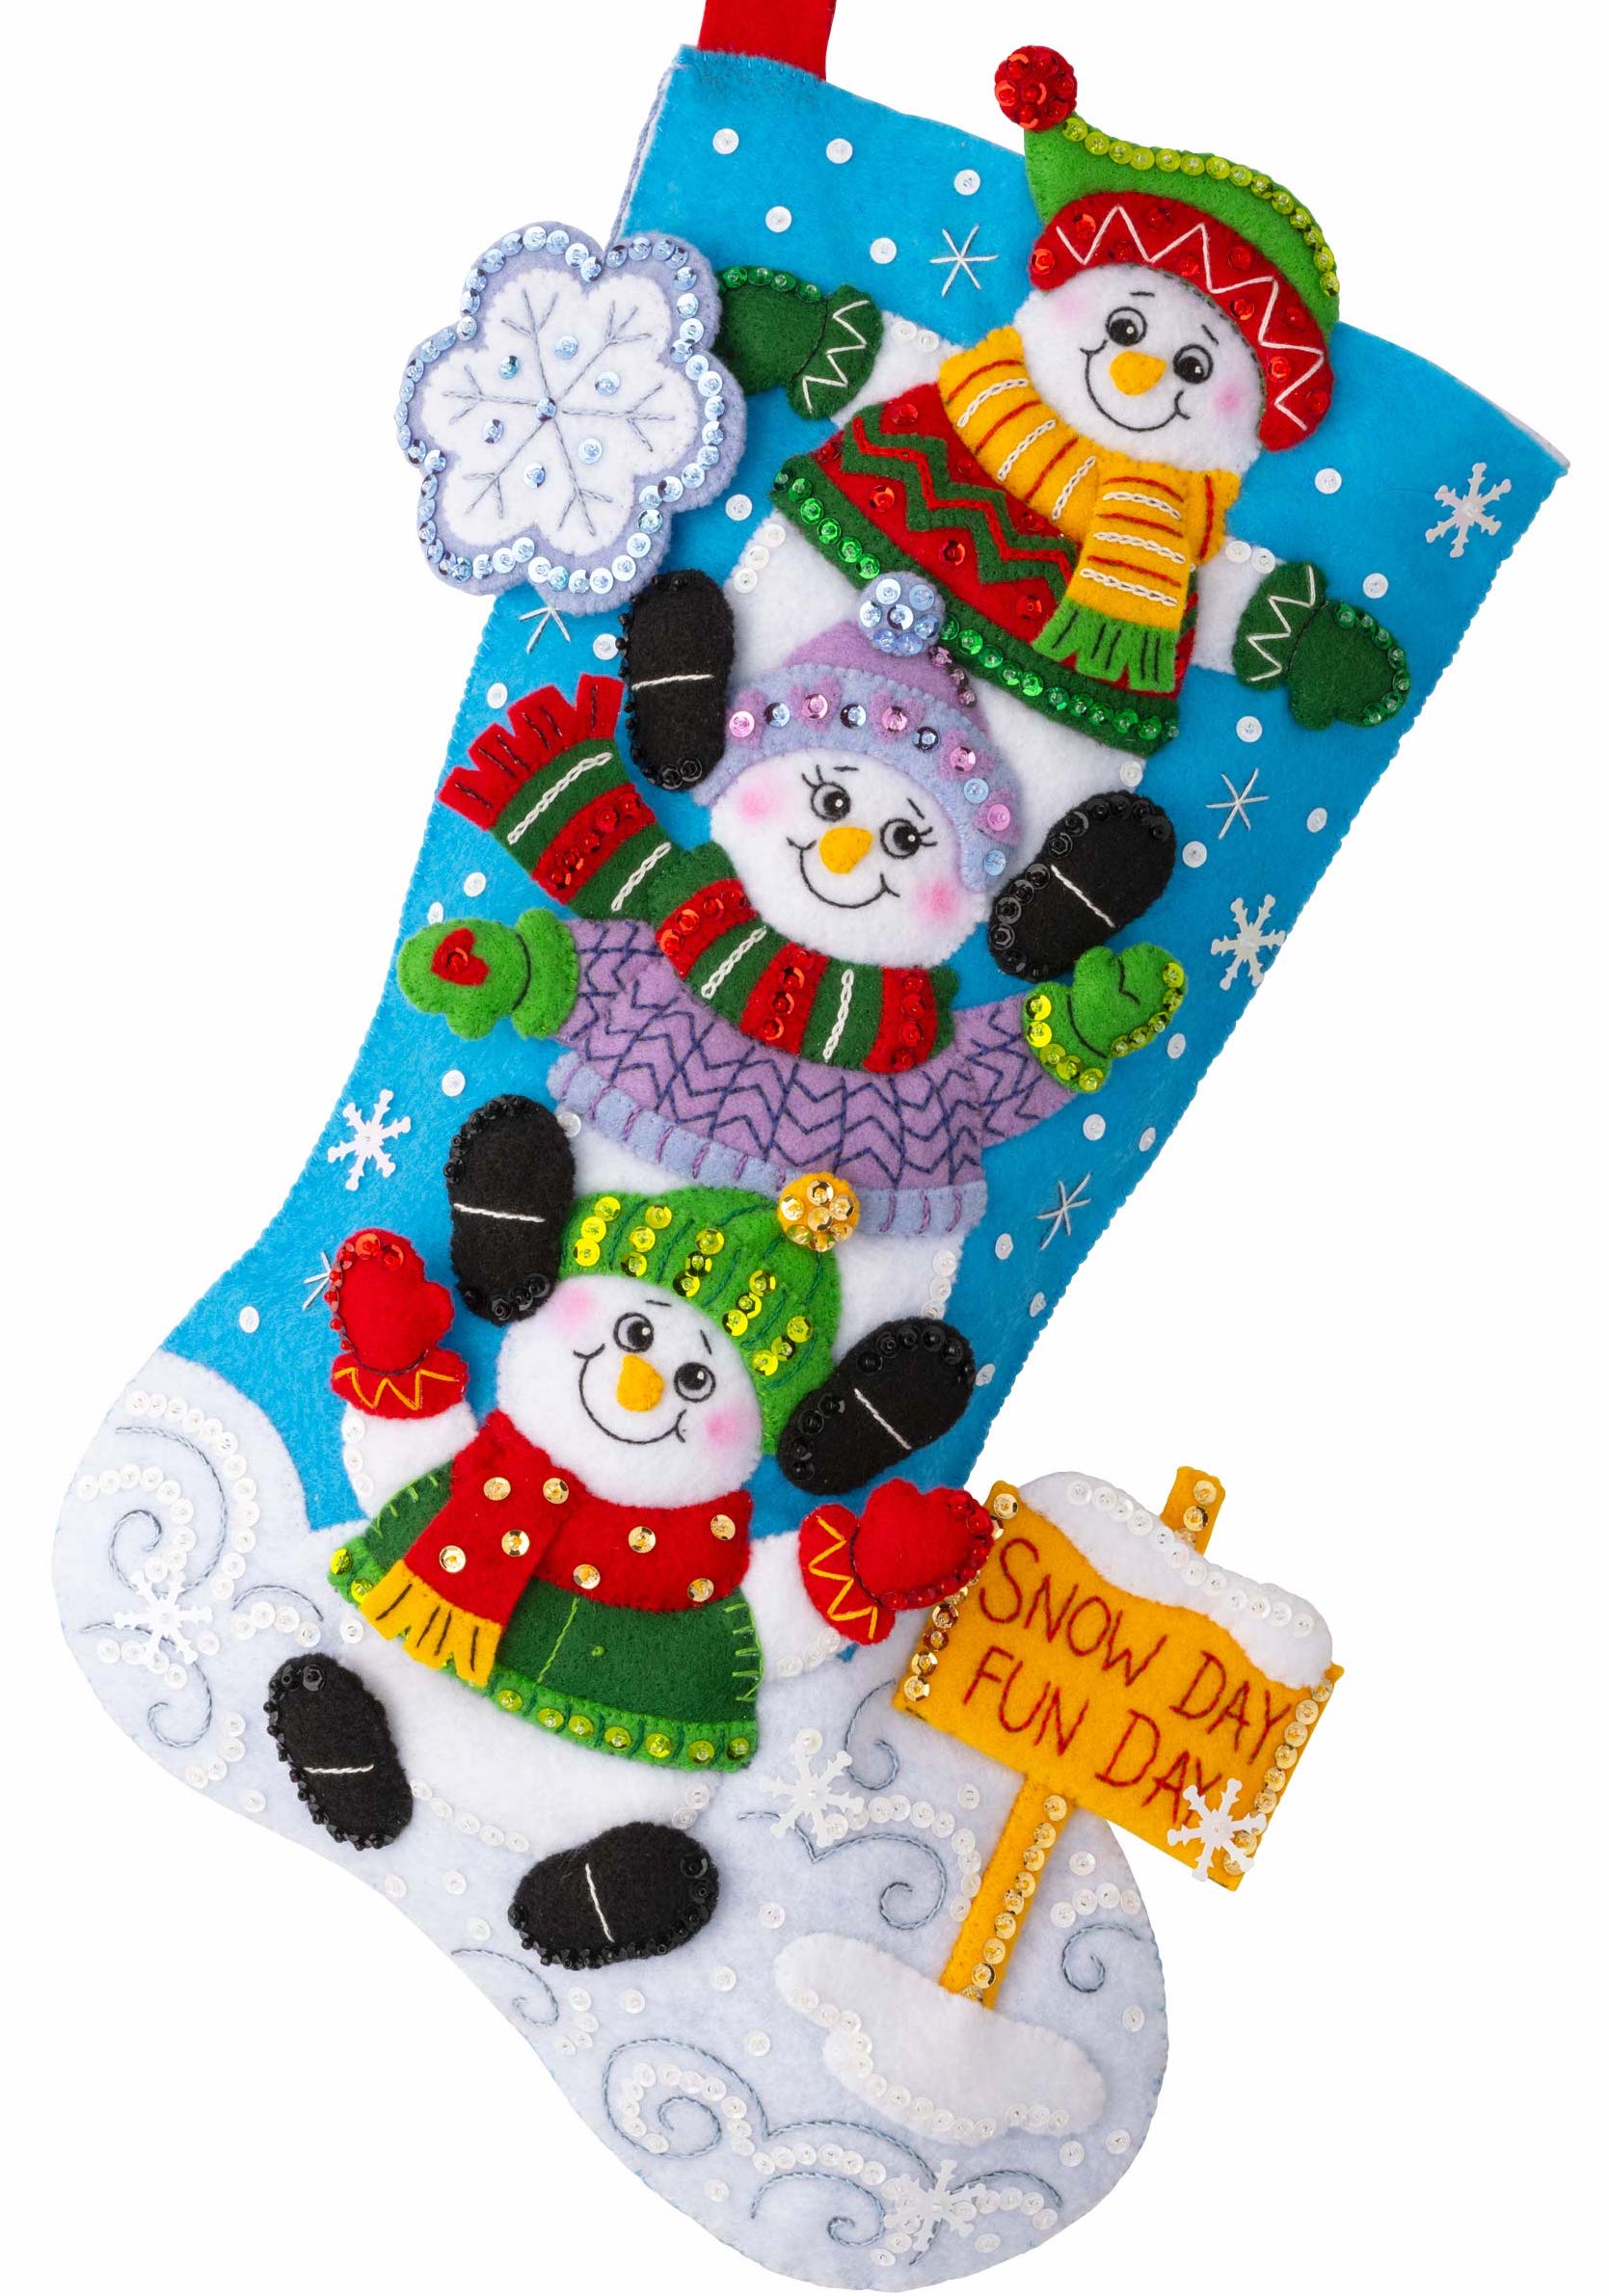 DIY Bucilla Snow Much Fun Snowmen Winter Christmas Felt Stocking Kit 89478E